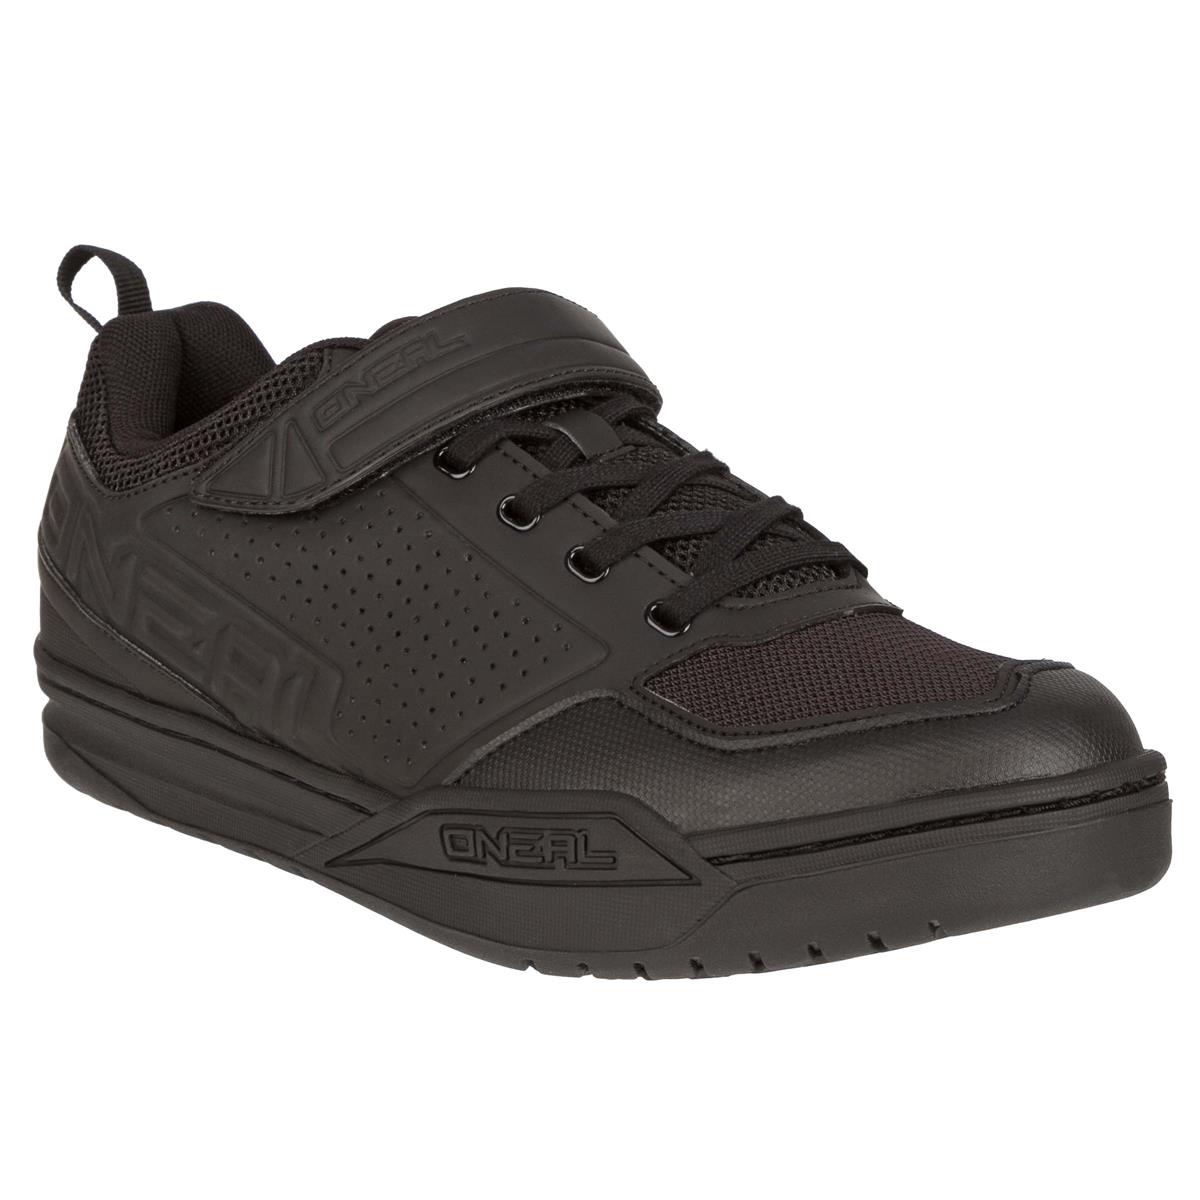 ONeal Session SPD Shoes Men black 2019 Schuhe schwarz 